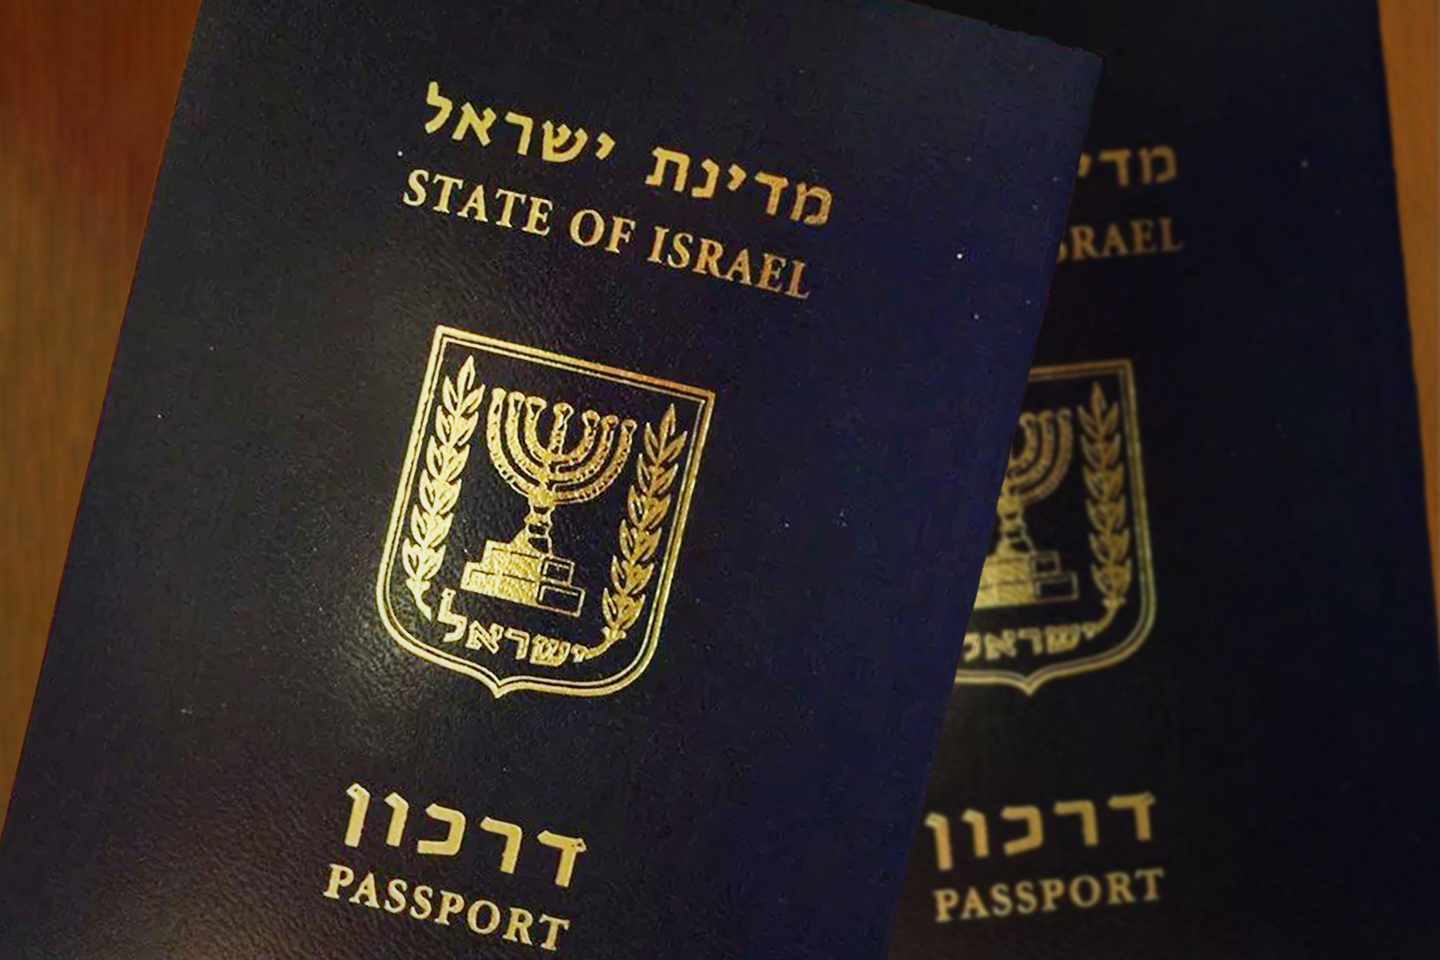 israel passports Image own work